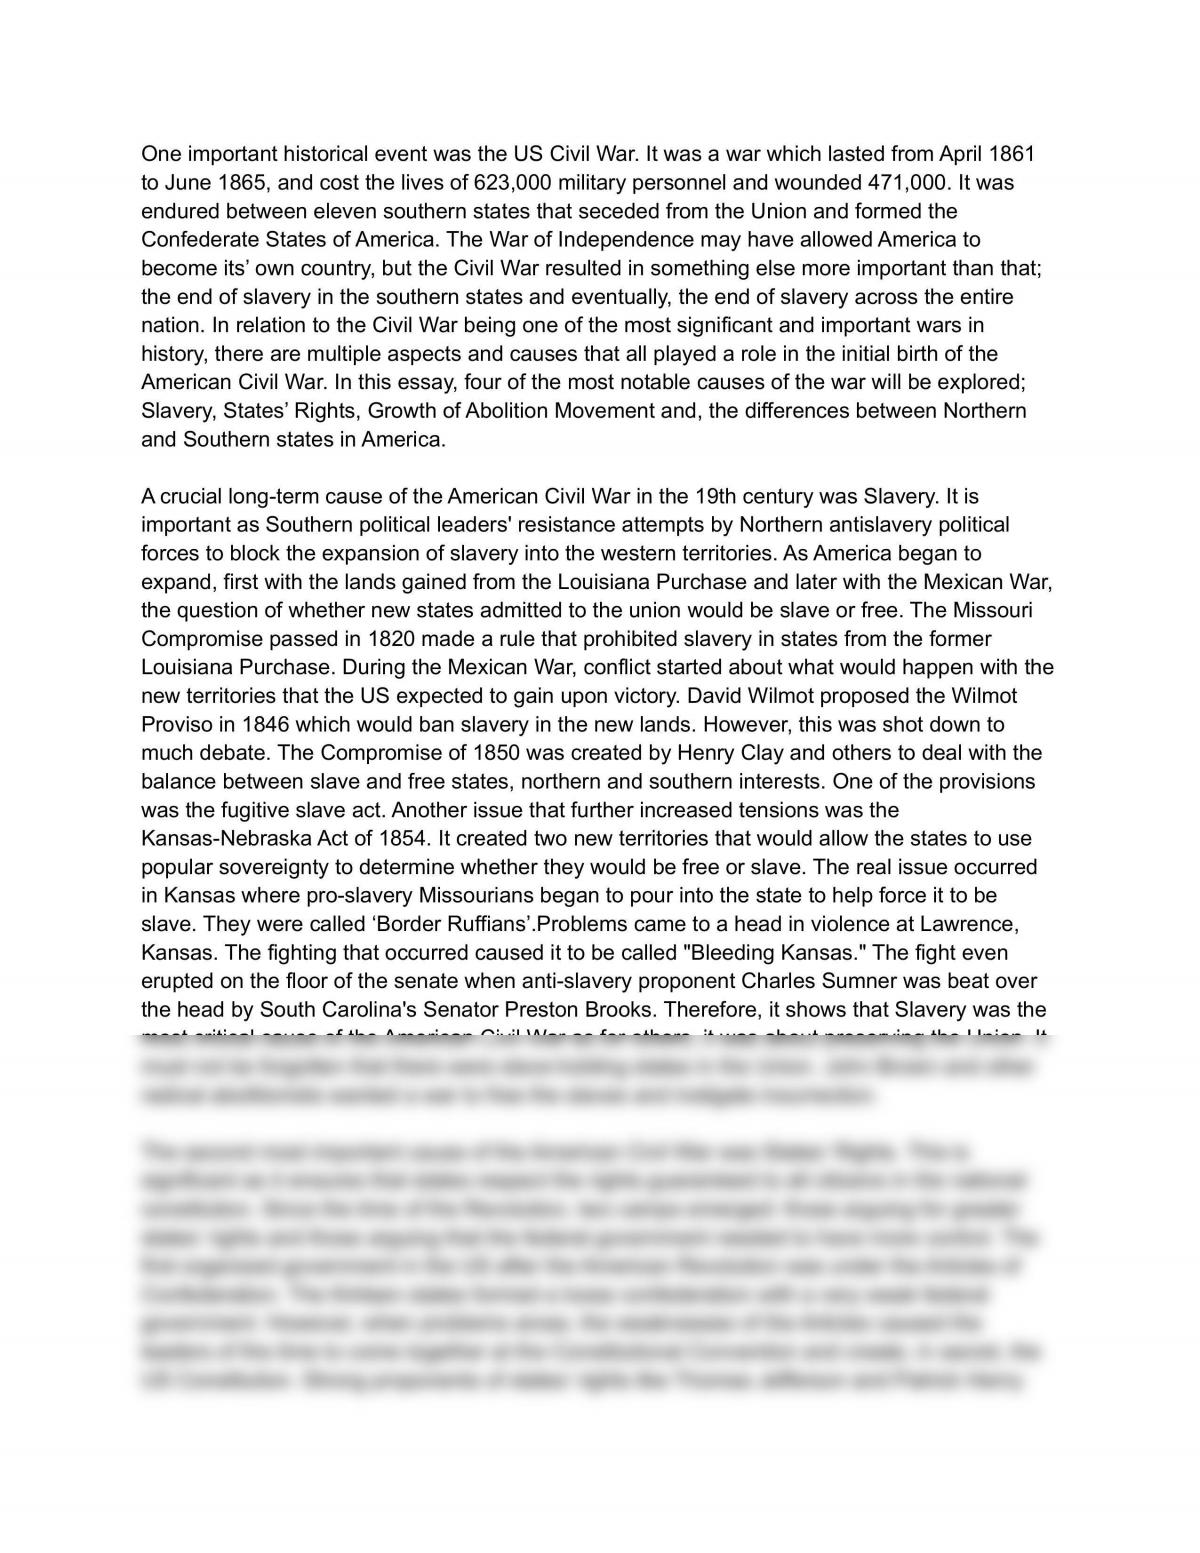 causes of the civil war essay pdf